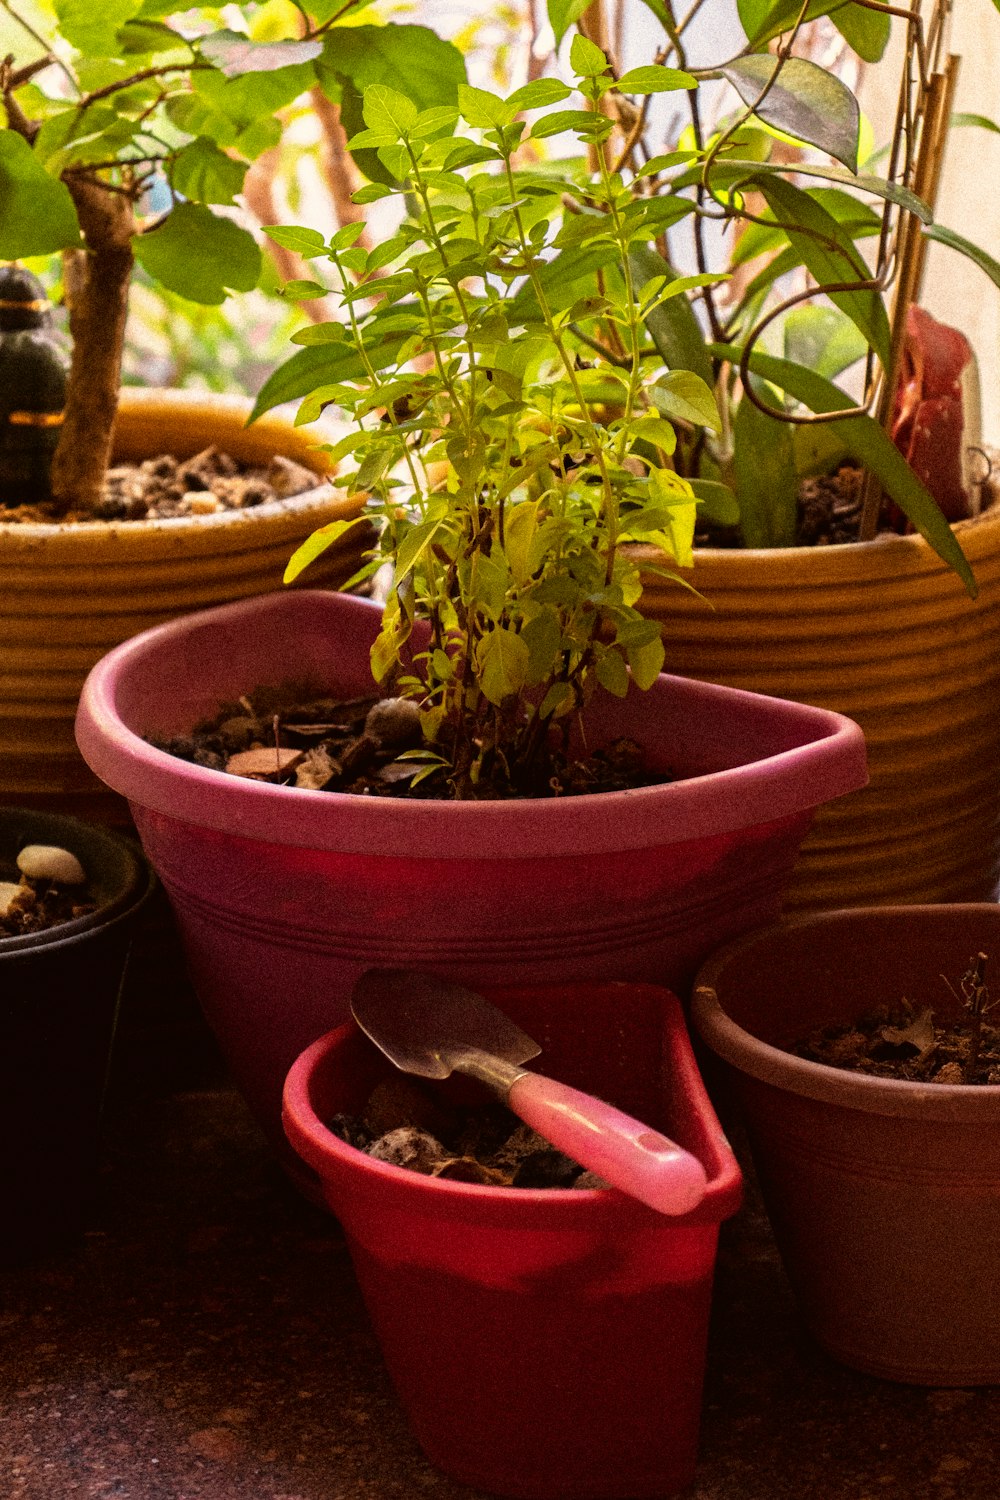 shovel on red plastic pot near indoor plants